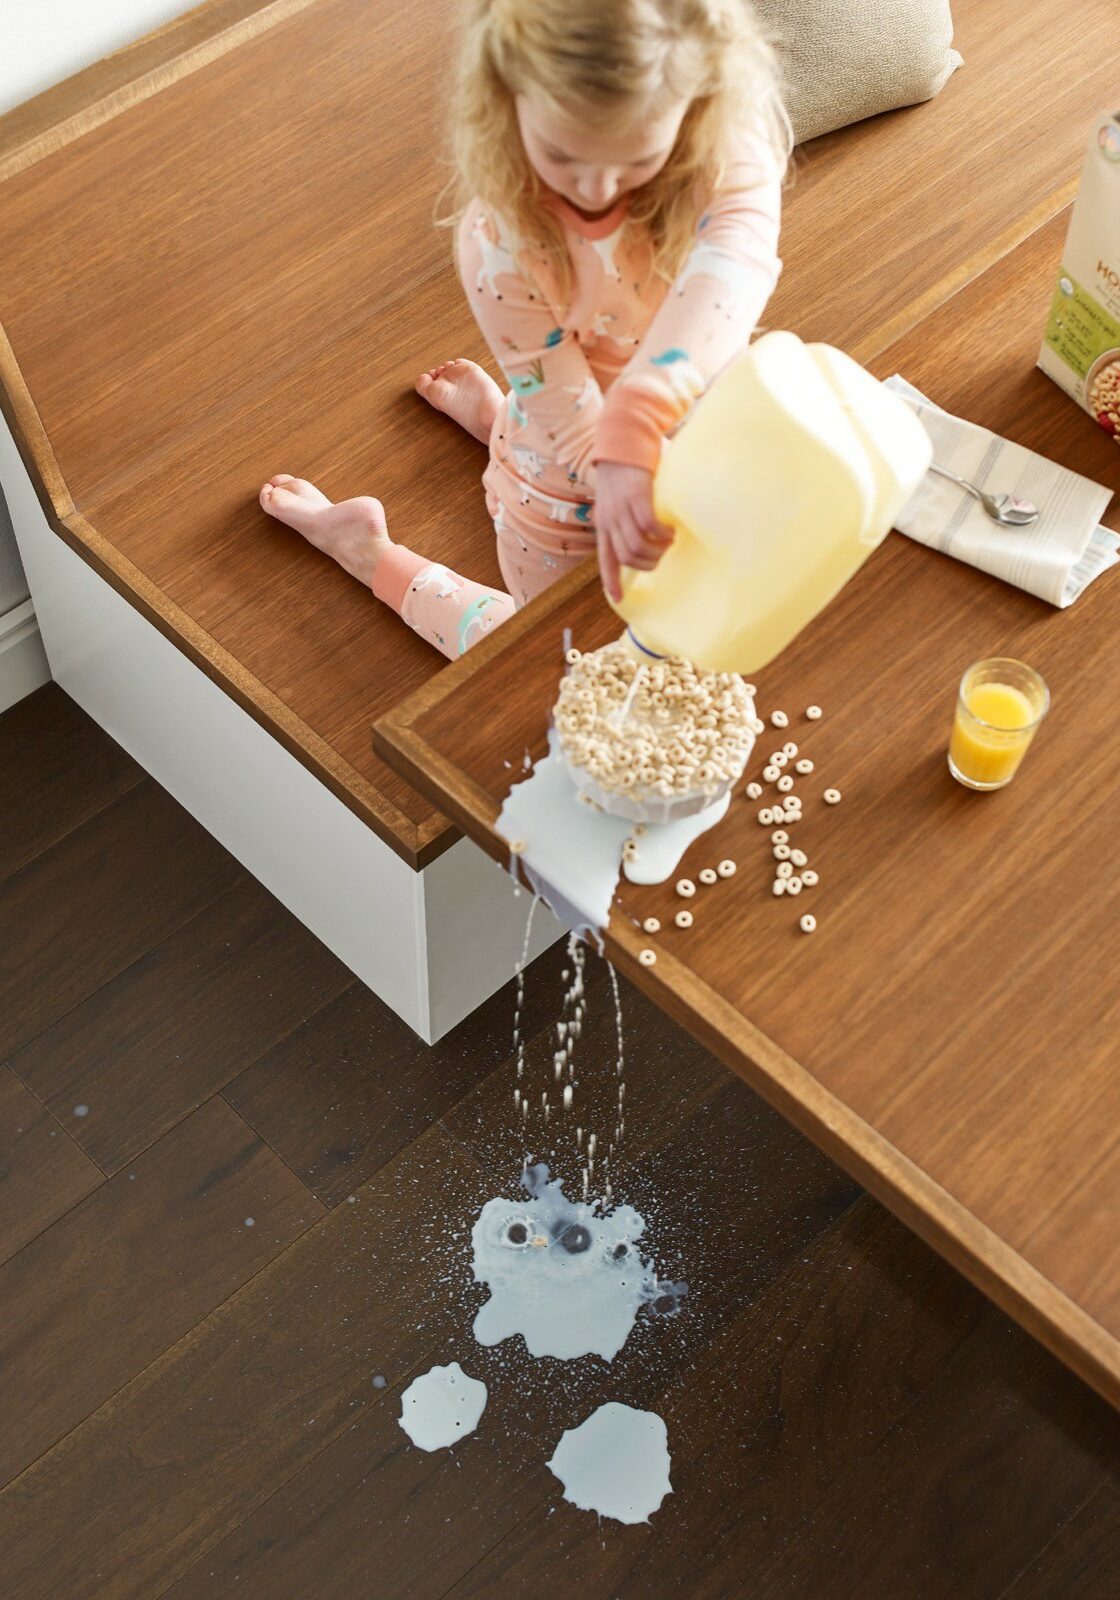 Milk spill cleaning | Budget Floors